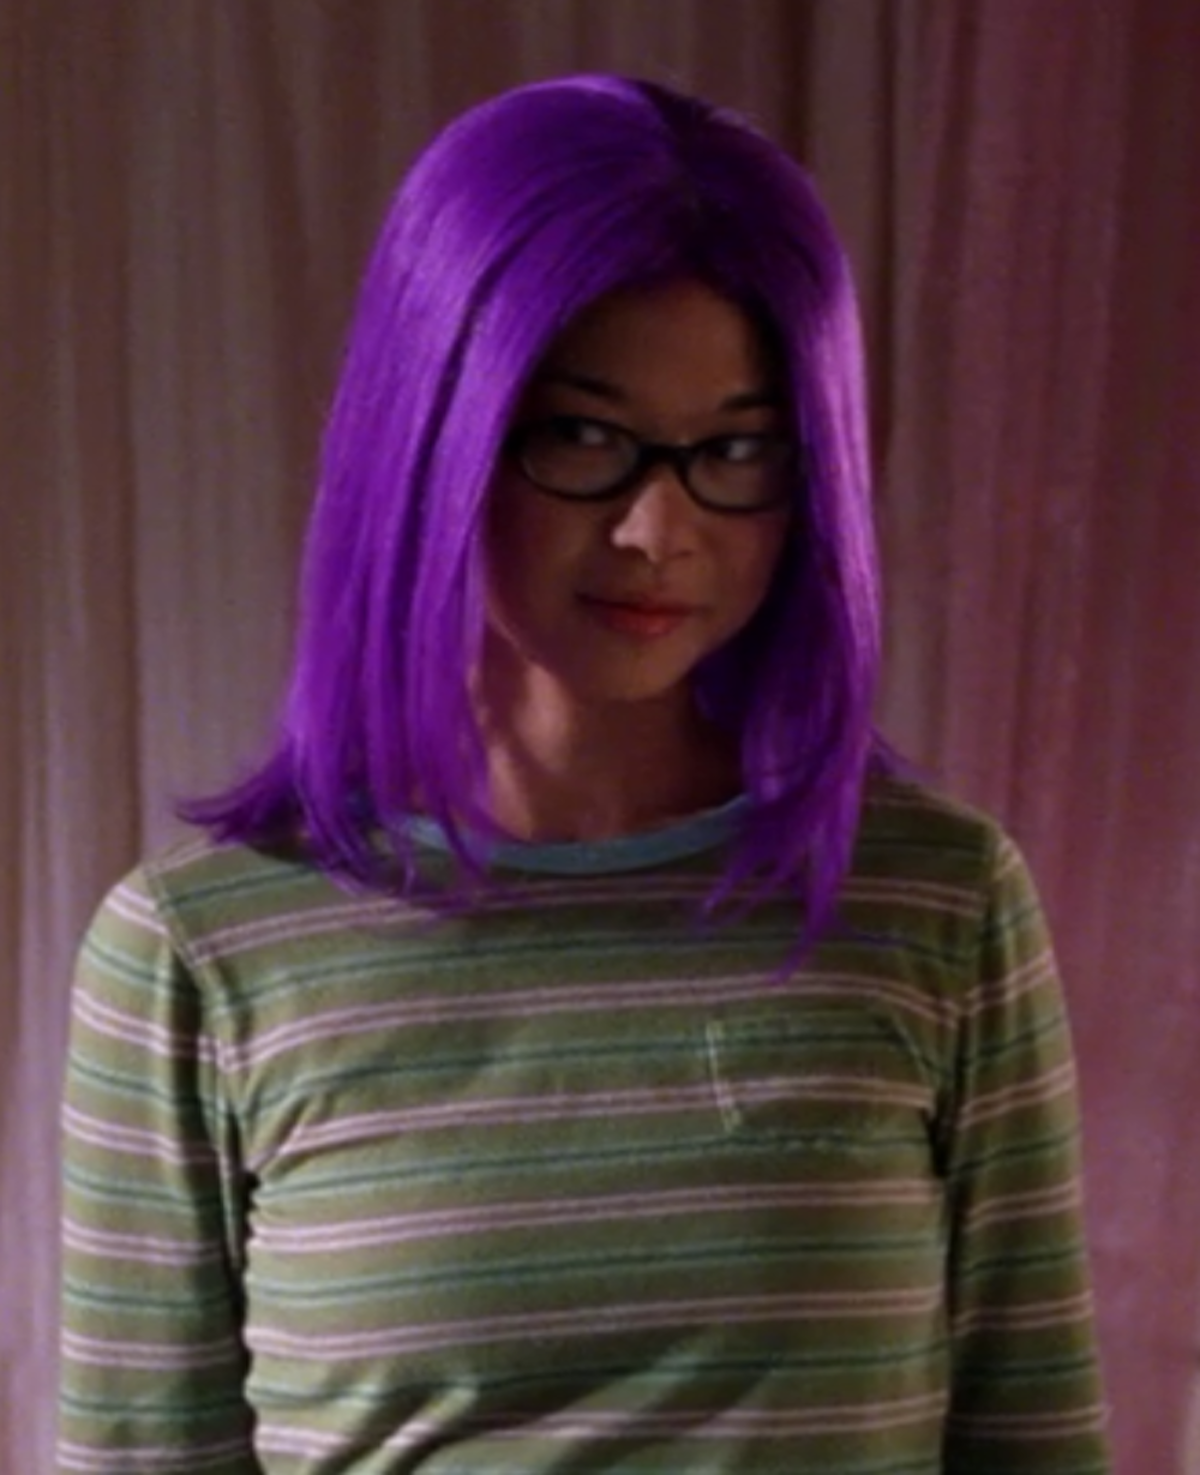 18 Purple Hair Halloween Costume Ideas for 2022